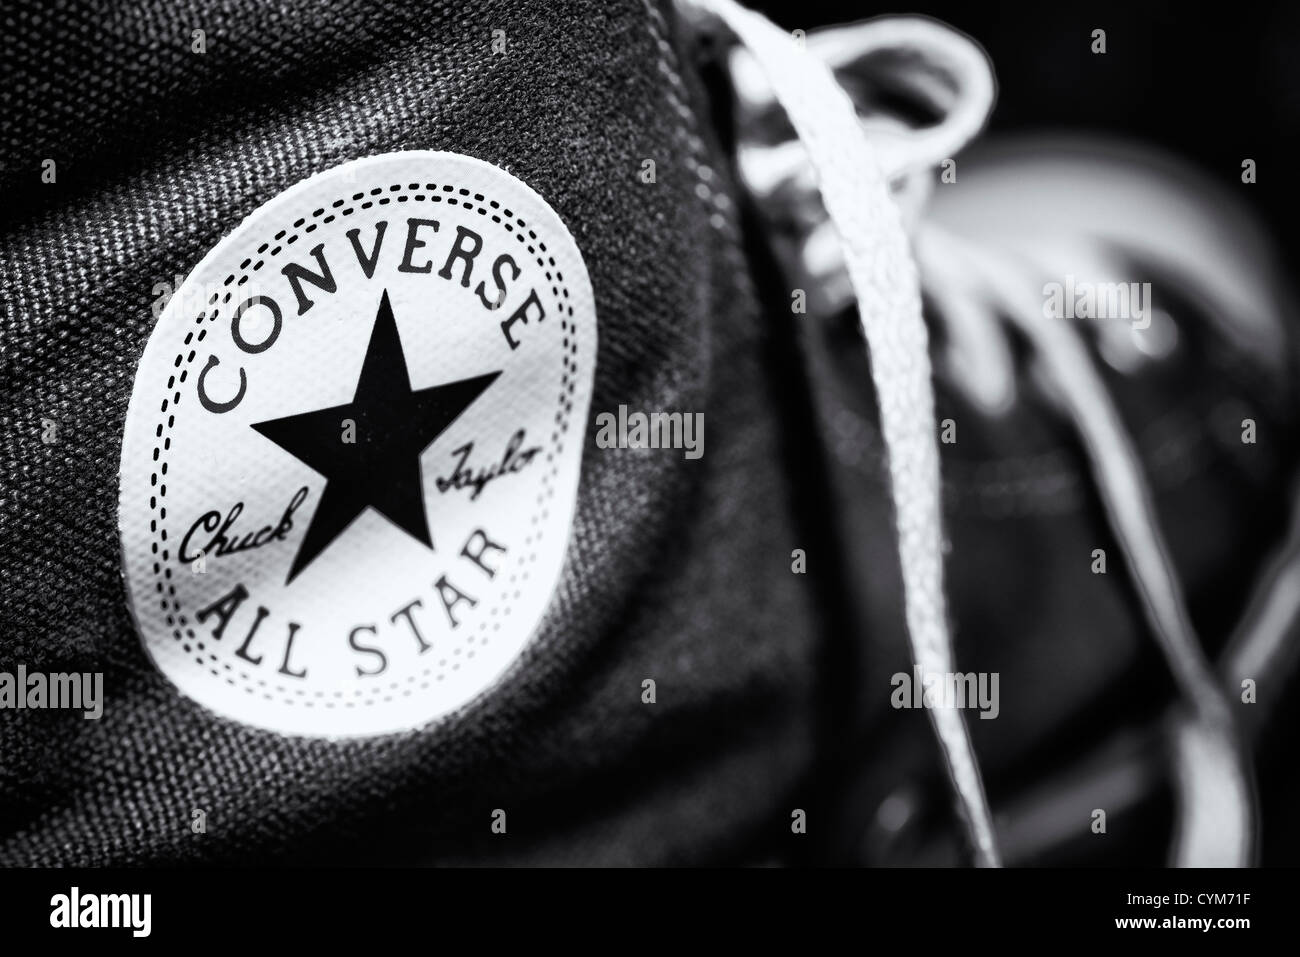 Converse  All Star Shoe detail converse all stars converse allstar Stock Photo